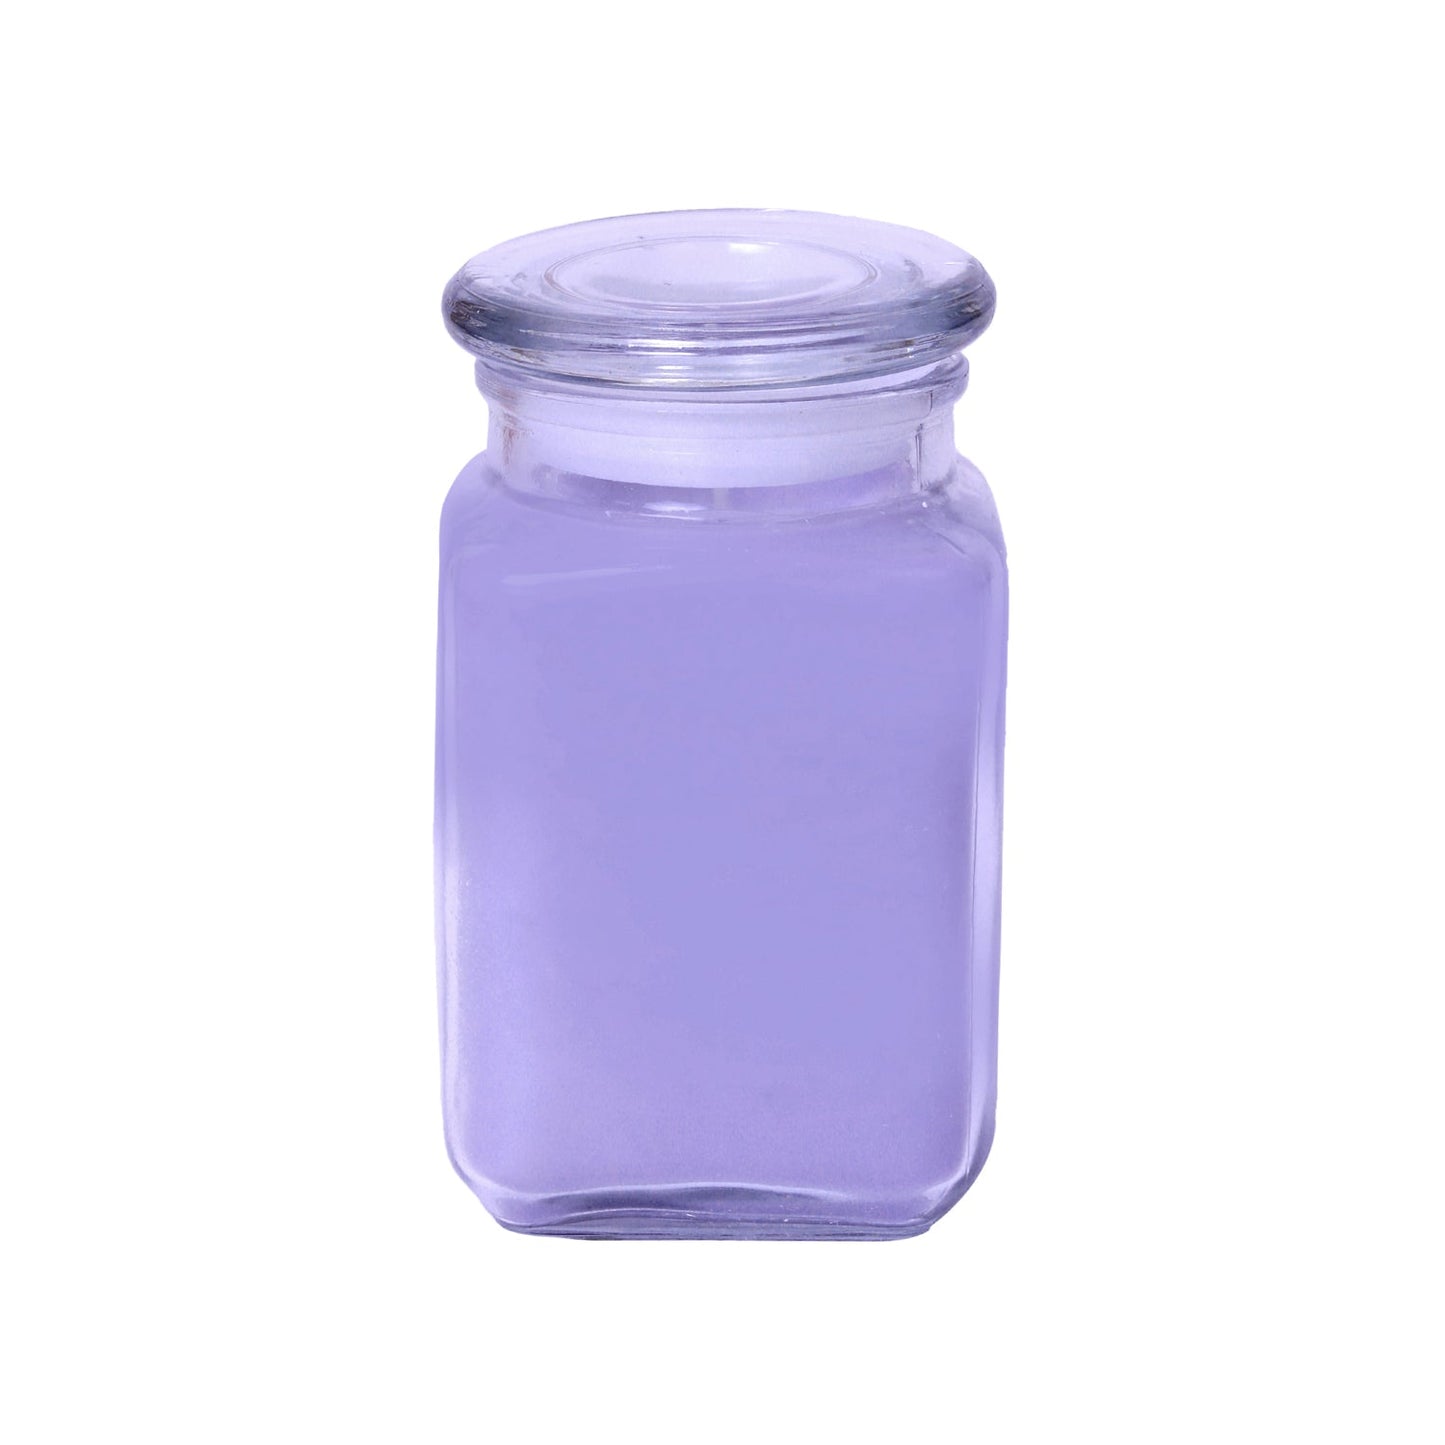 Hosley 530ml (18oz) Lavender Scented Glass Jar